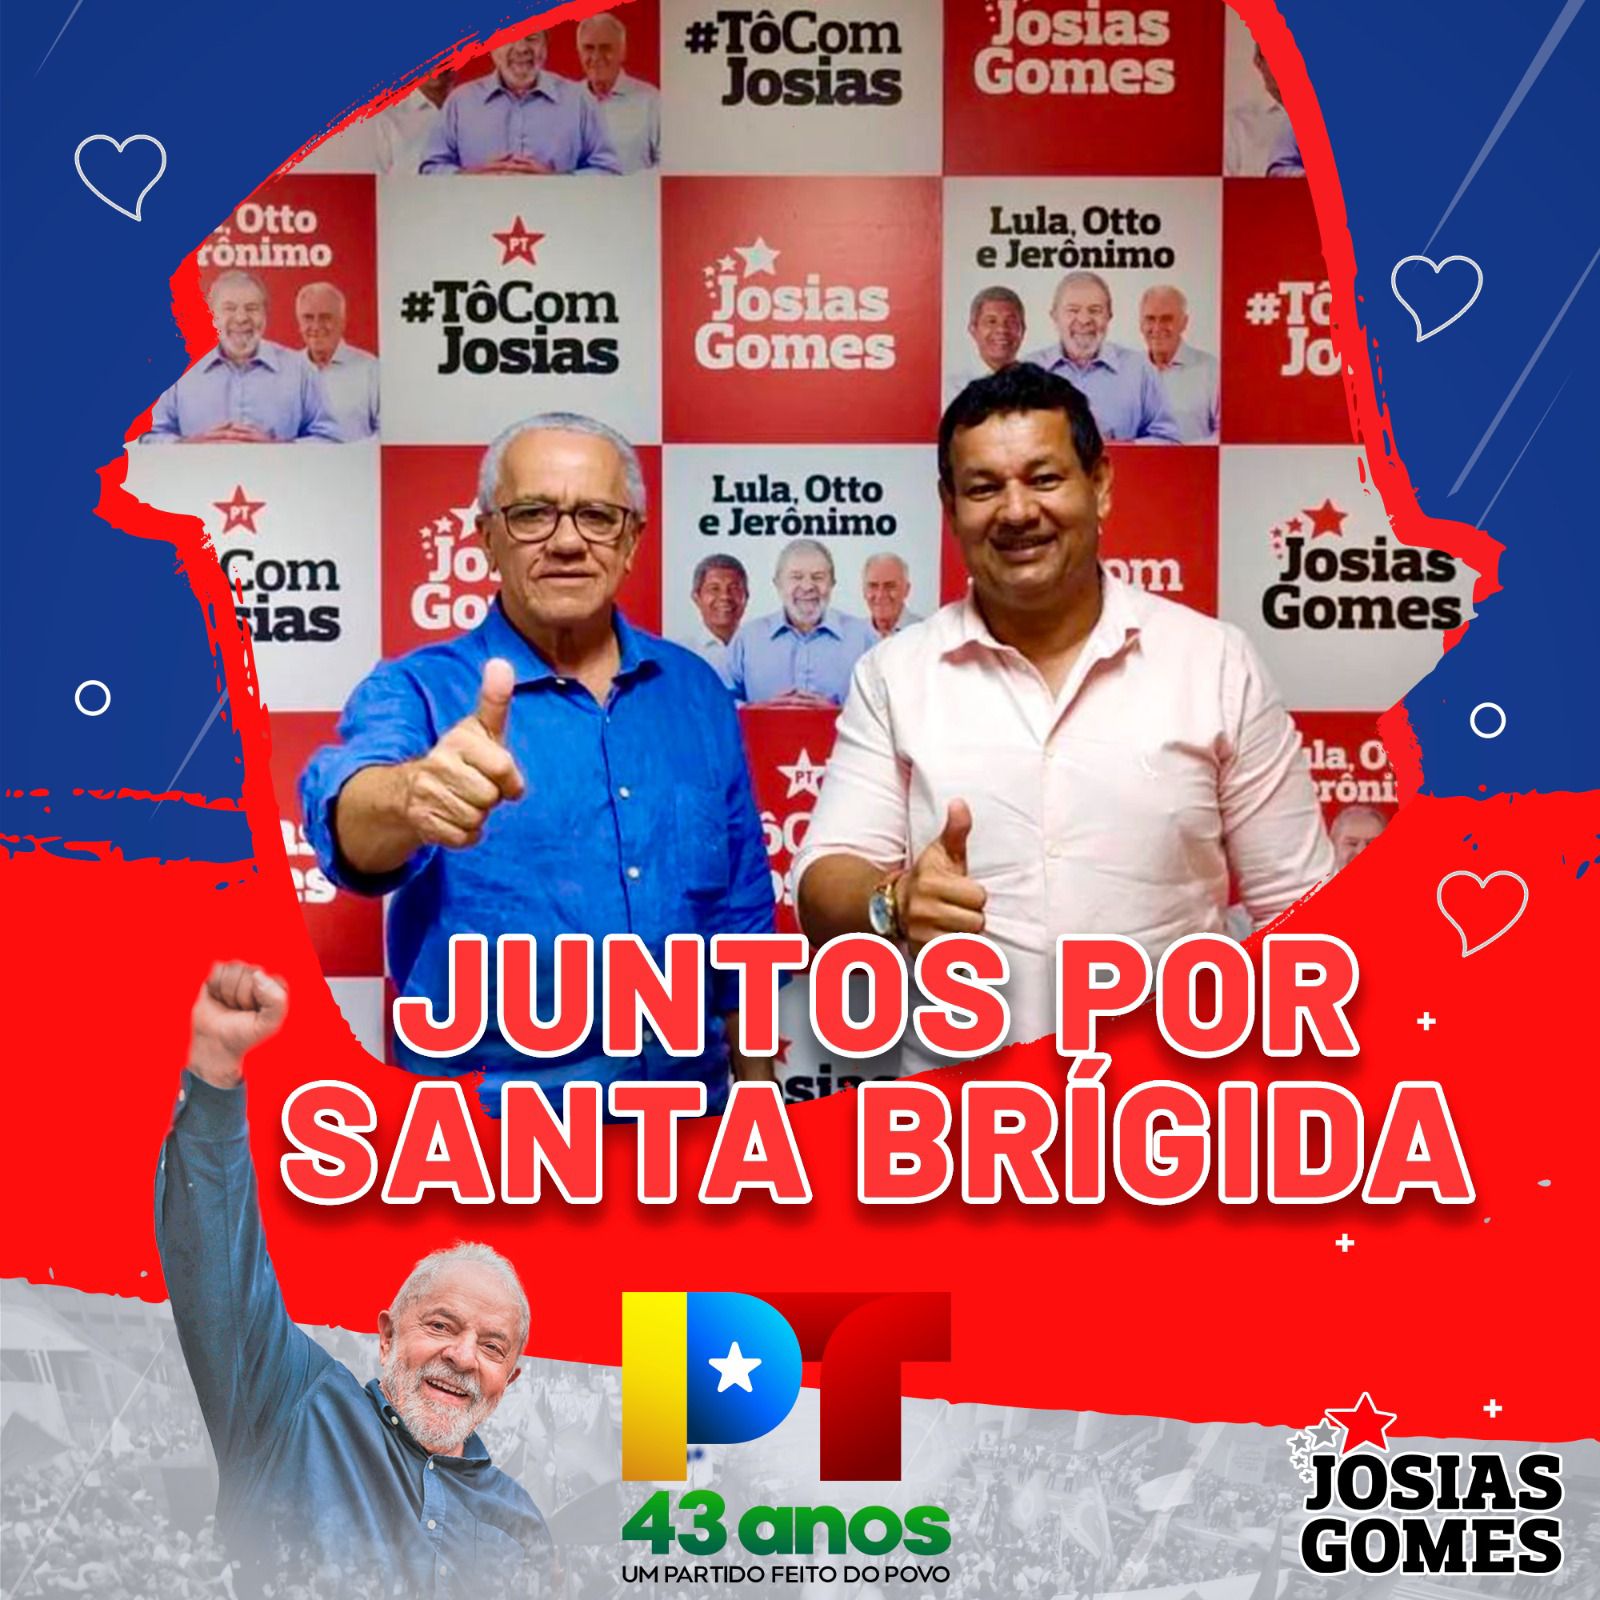 Josias Gomes E Gordo, Juntos Por Santa Brígida